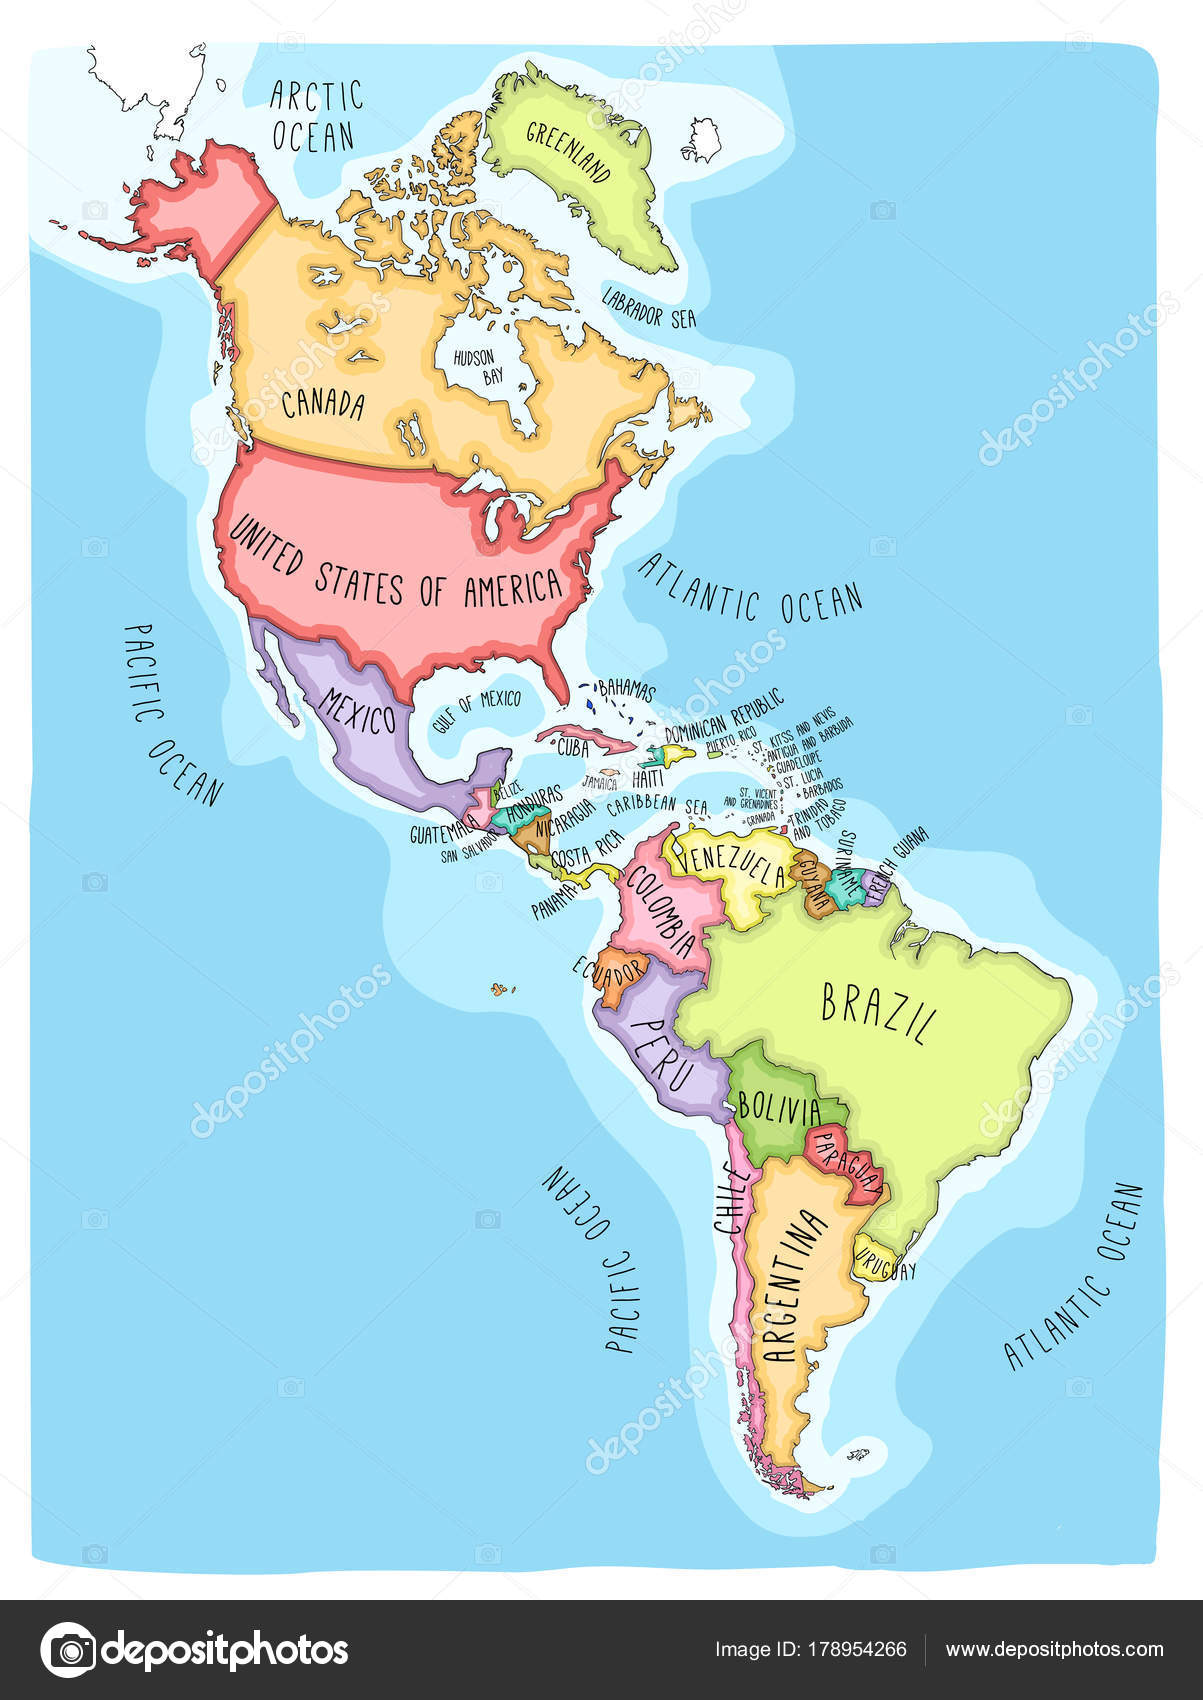 25 Unico Imagenes De Mapa Del Continente Americano